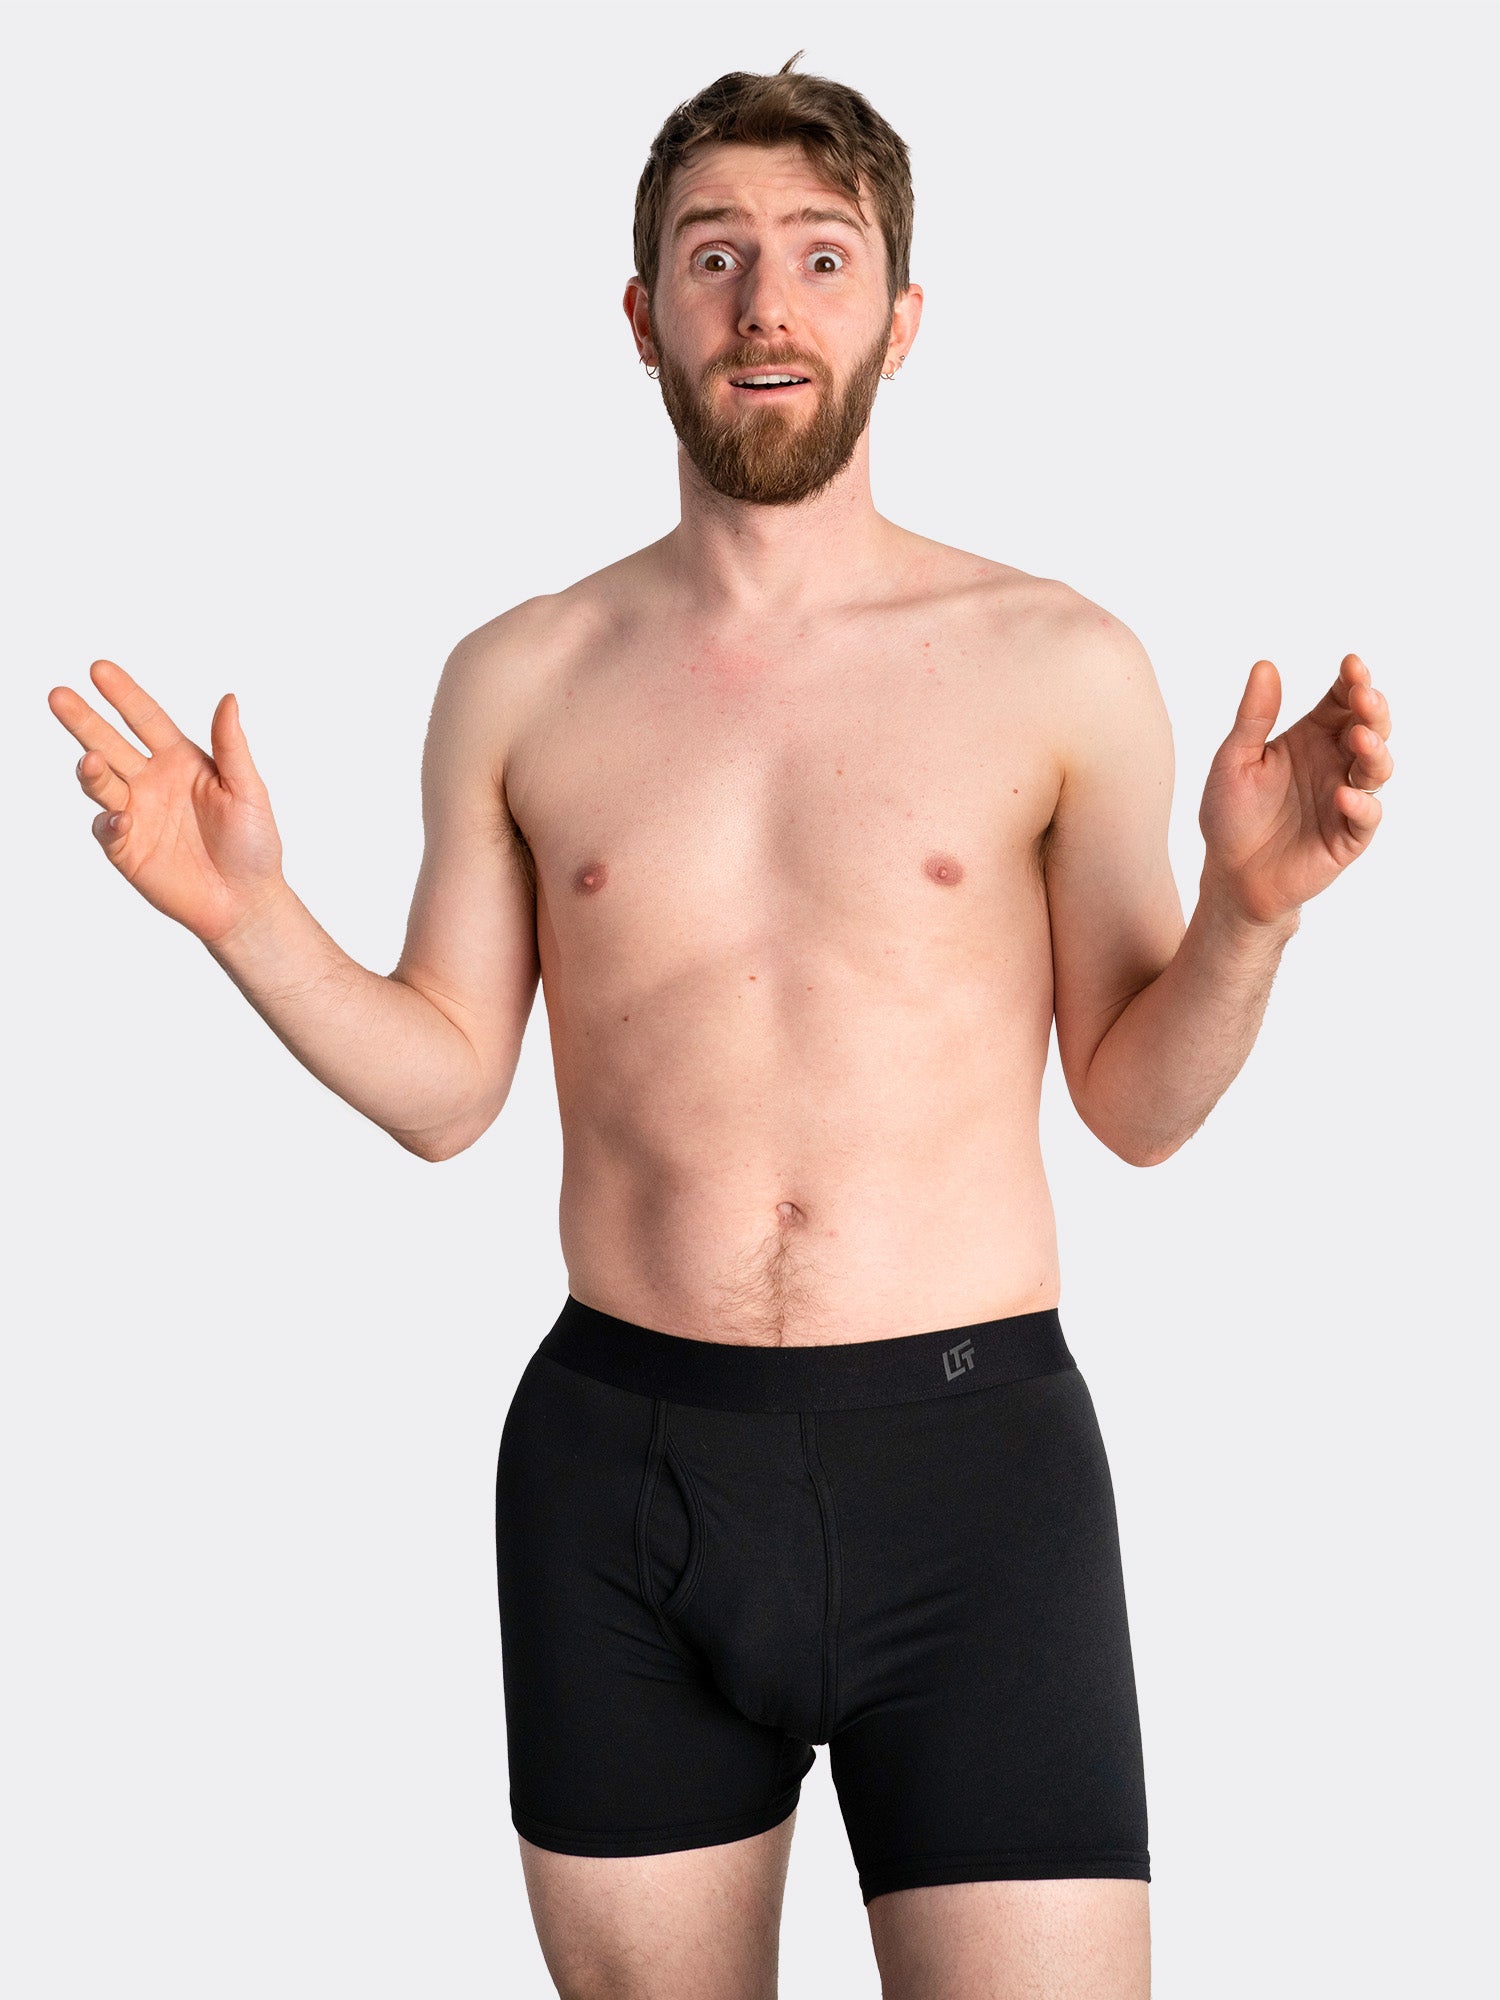 3pcs Fashion Modal Mens Underwear Winter Boxers Comfortable Mid